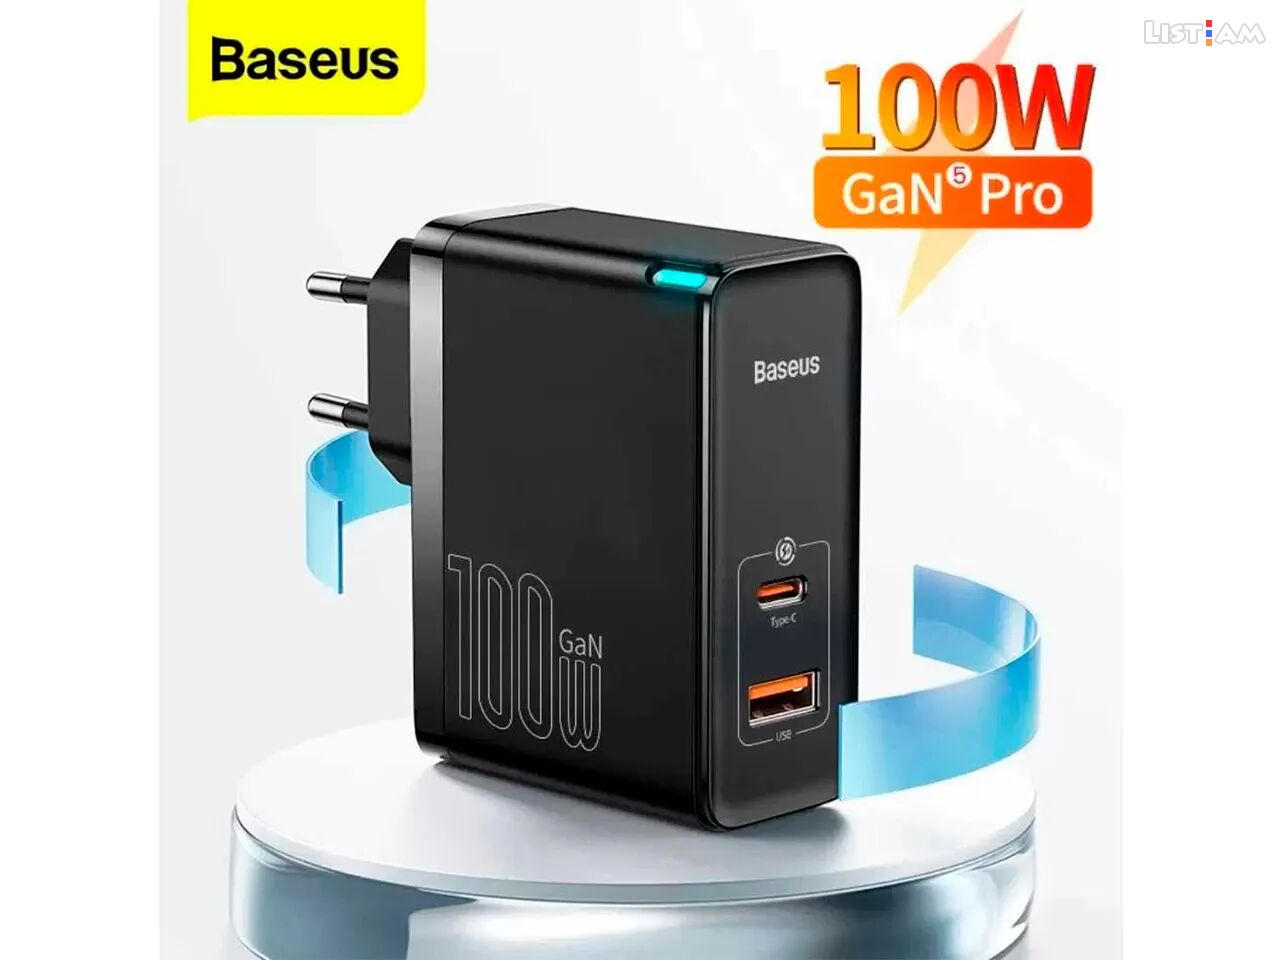 Baseus GaN5 Pro 100W